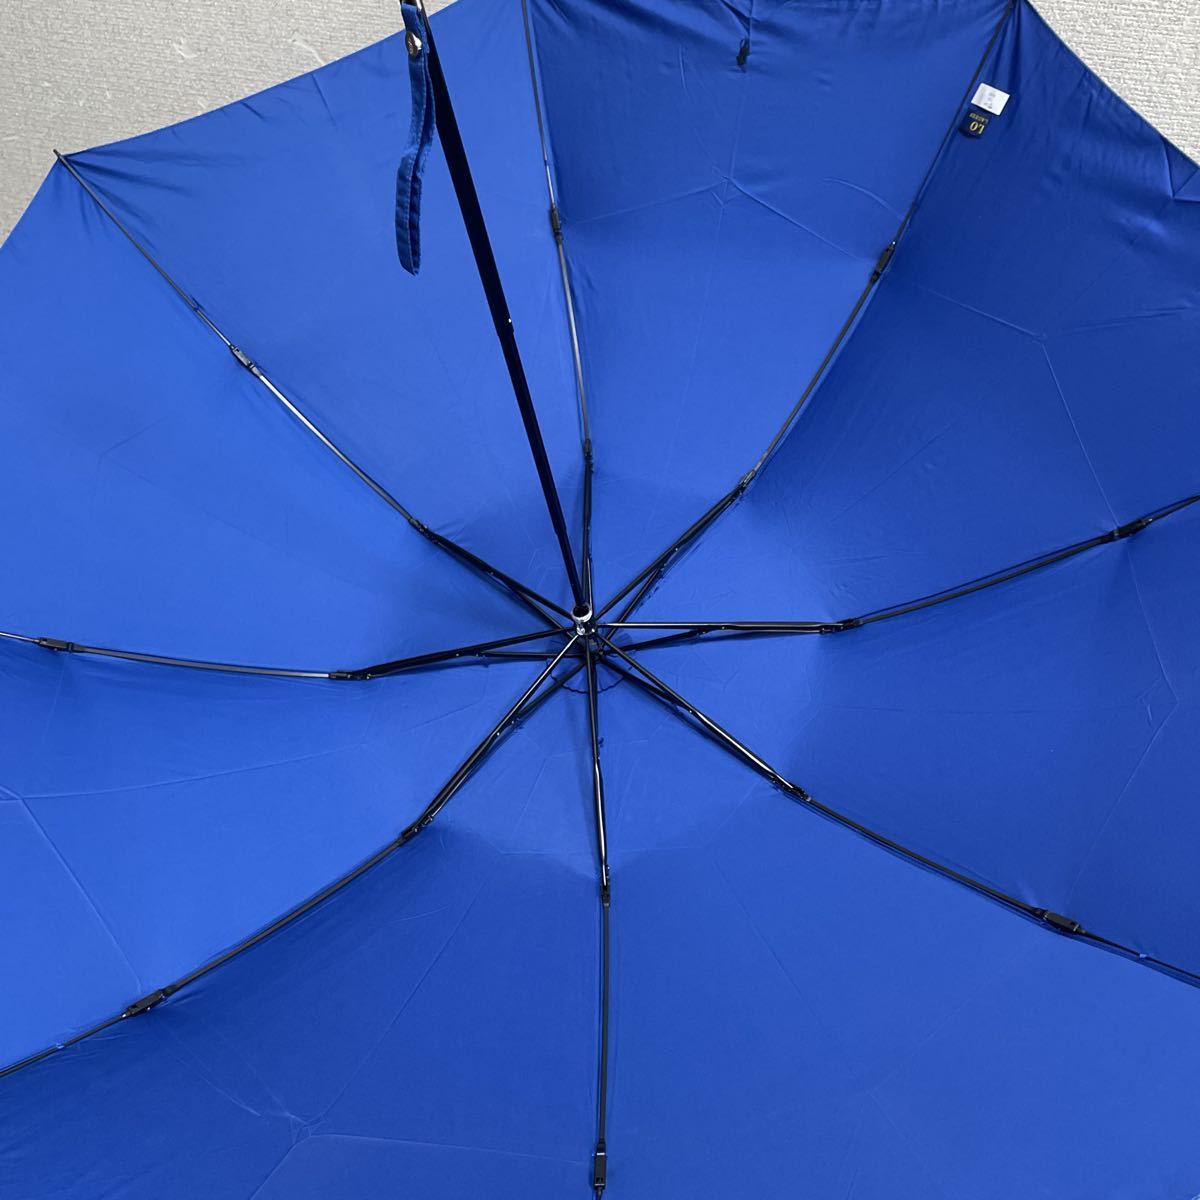  new goods Ralph Lauren umbrella umbrella folding umbrella for man large size 65